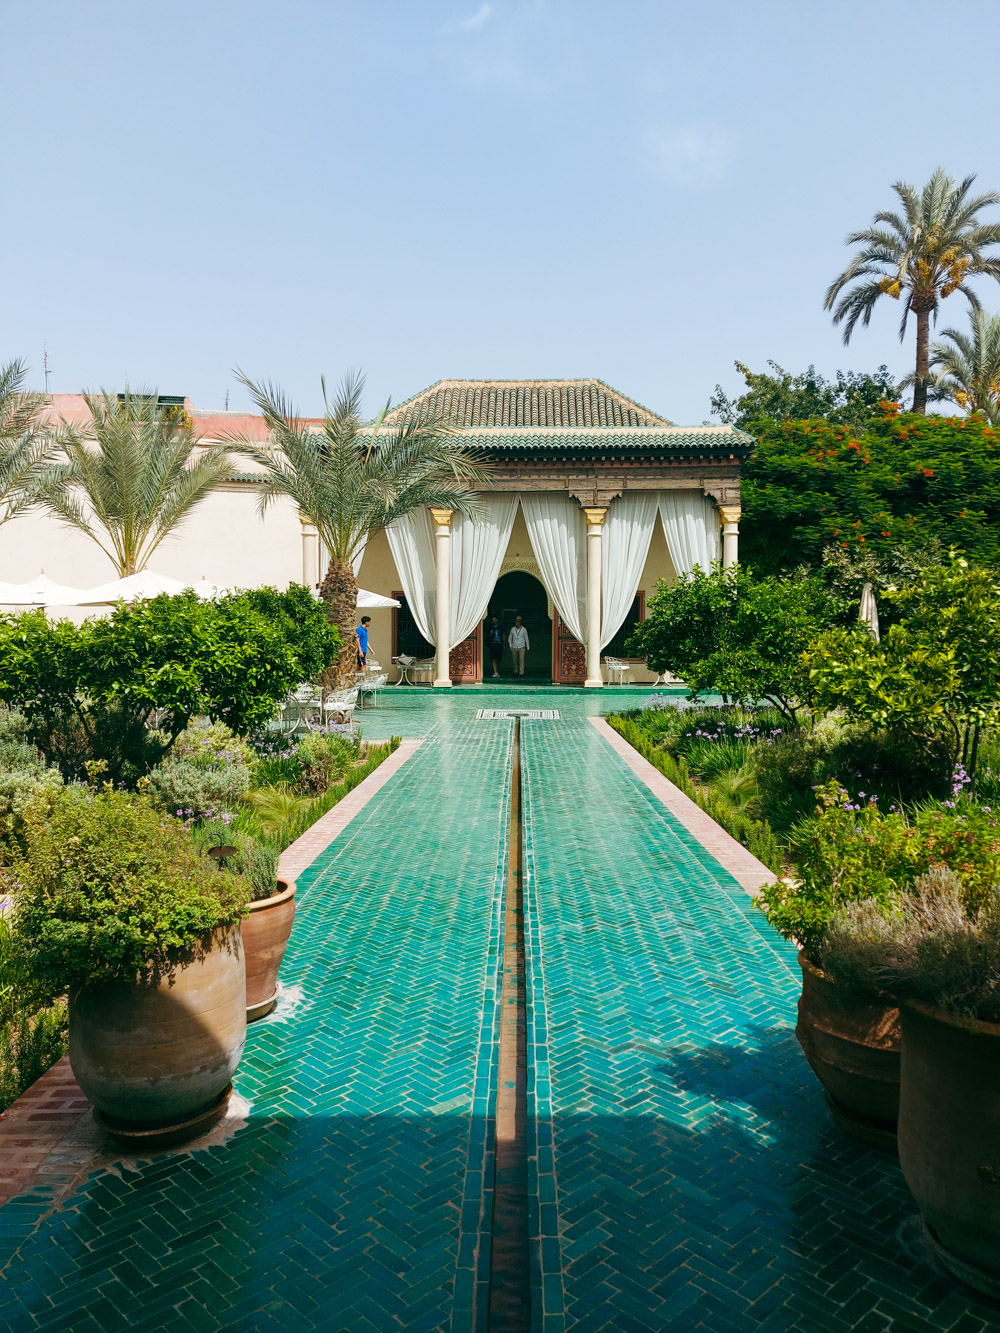 Le Jardin Secret Marrakech